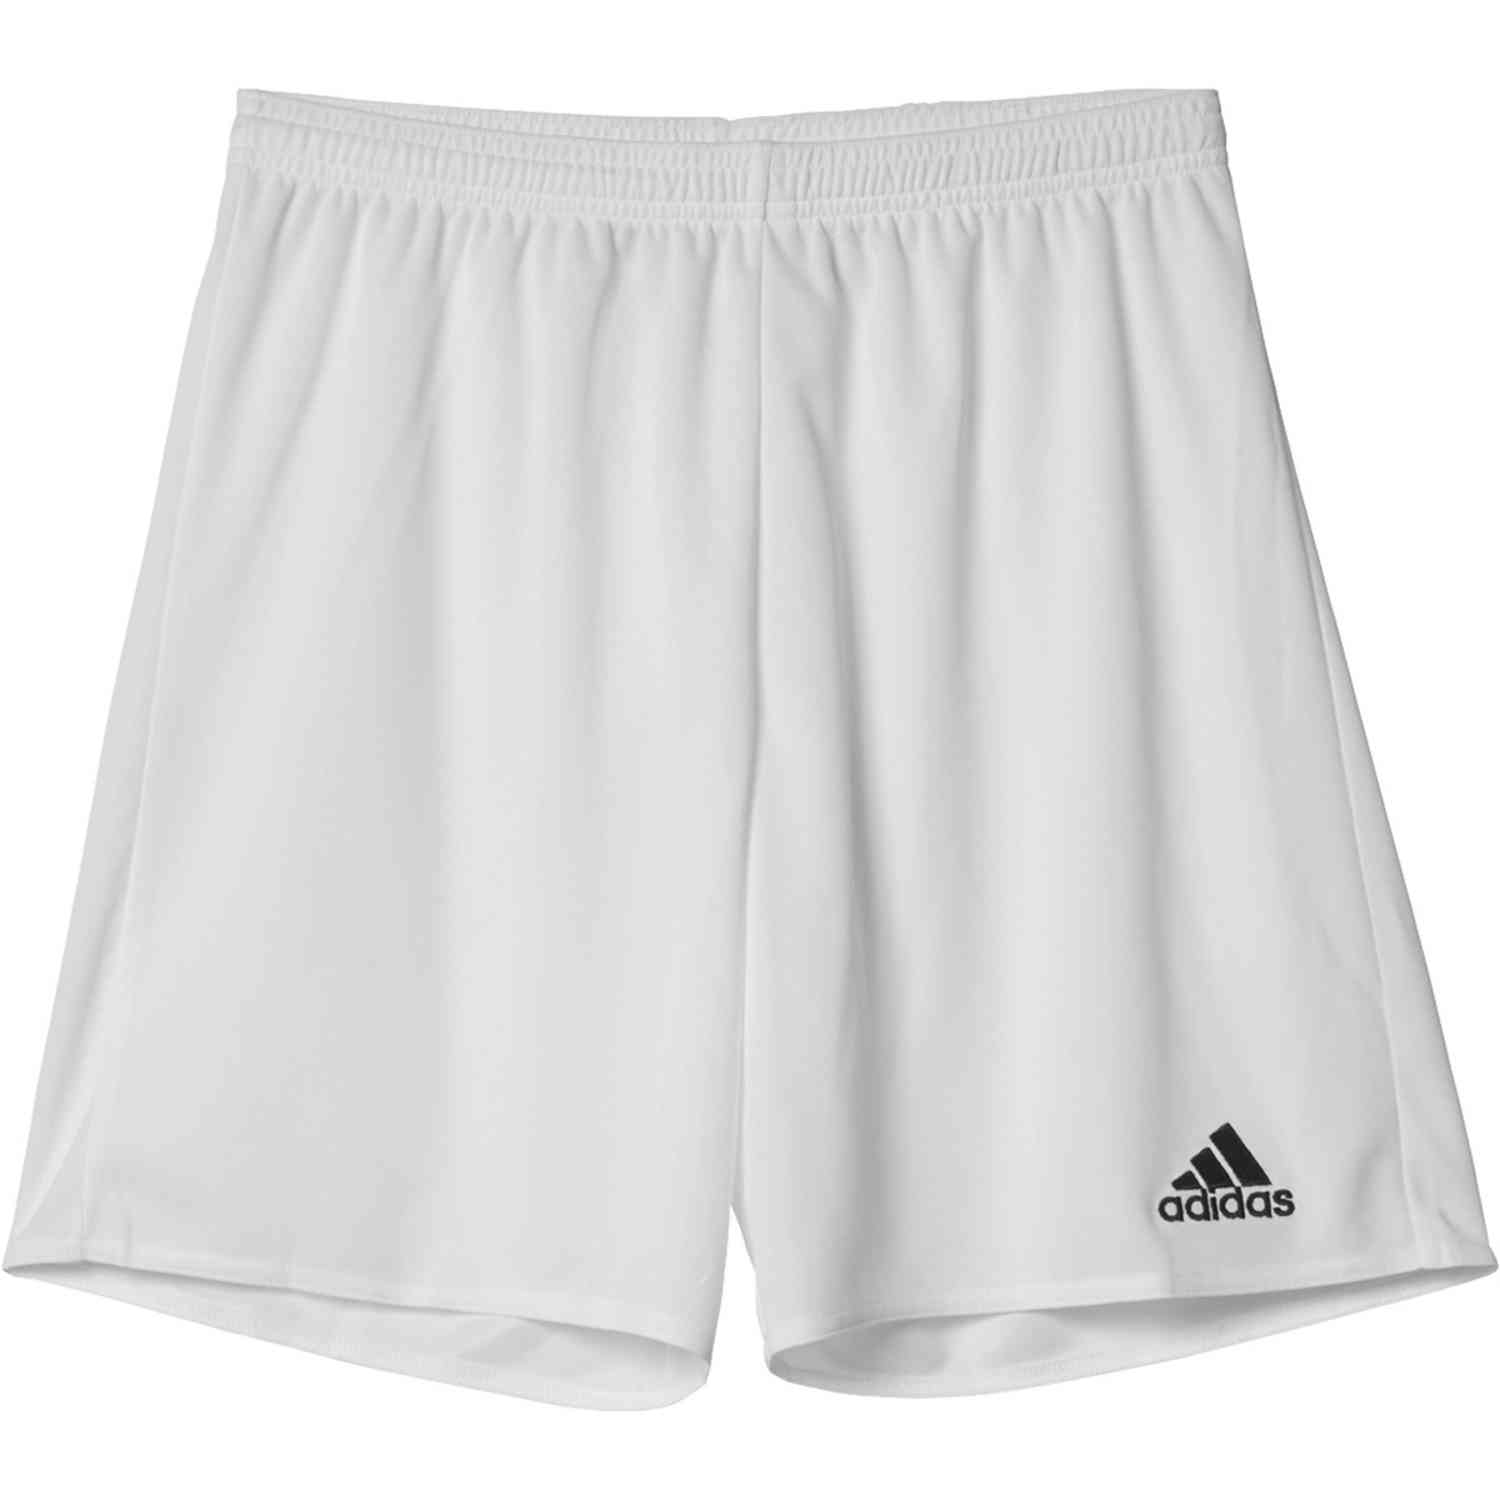 adidas Parma 16 Shorts - White - SoccerPro